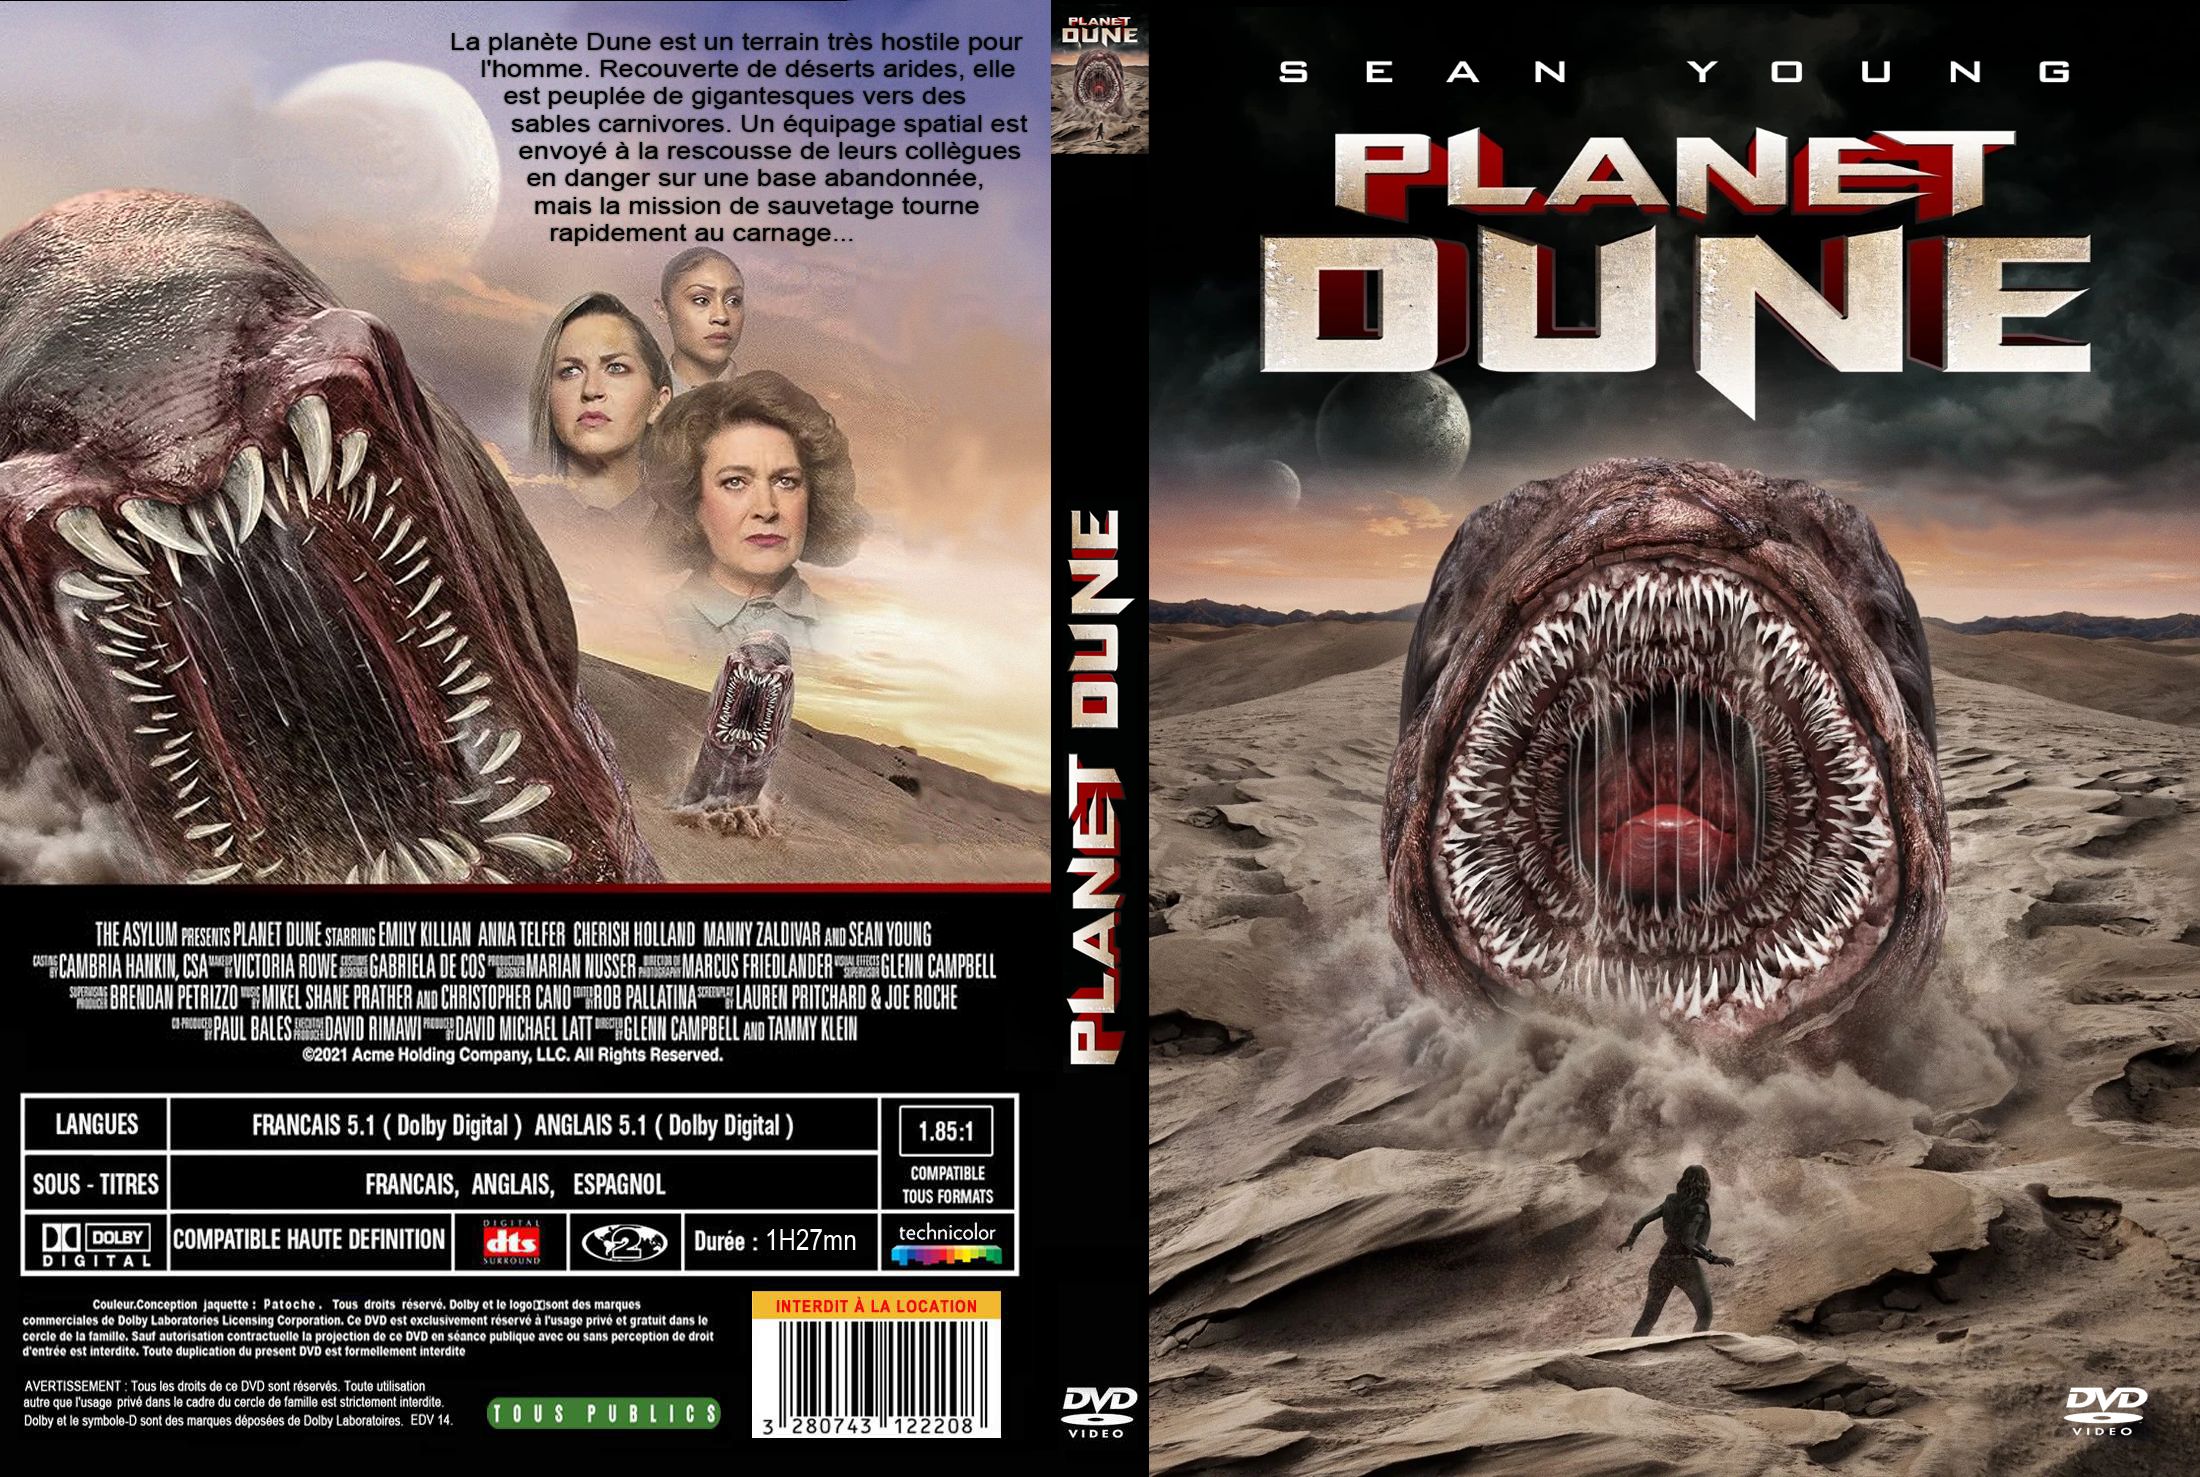 Jaquette DVD Planet Dune custom